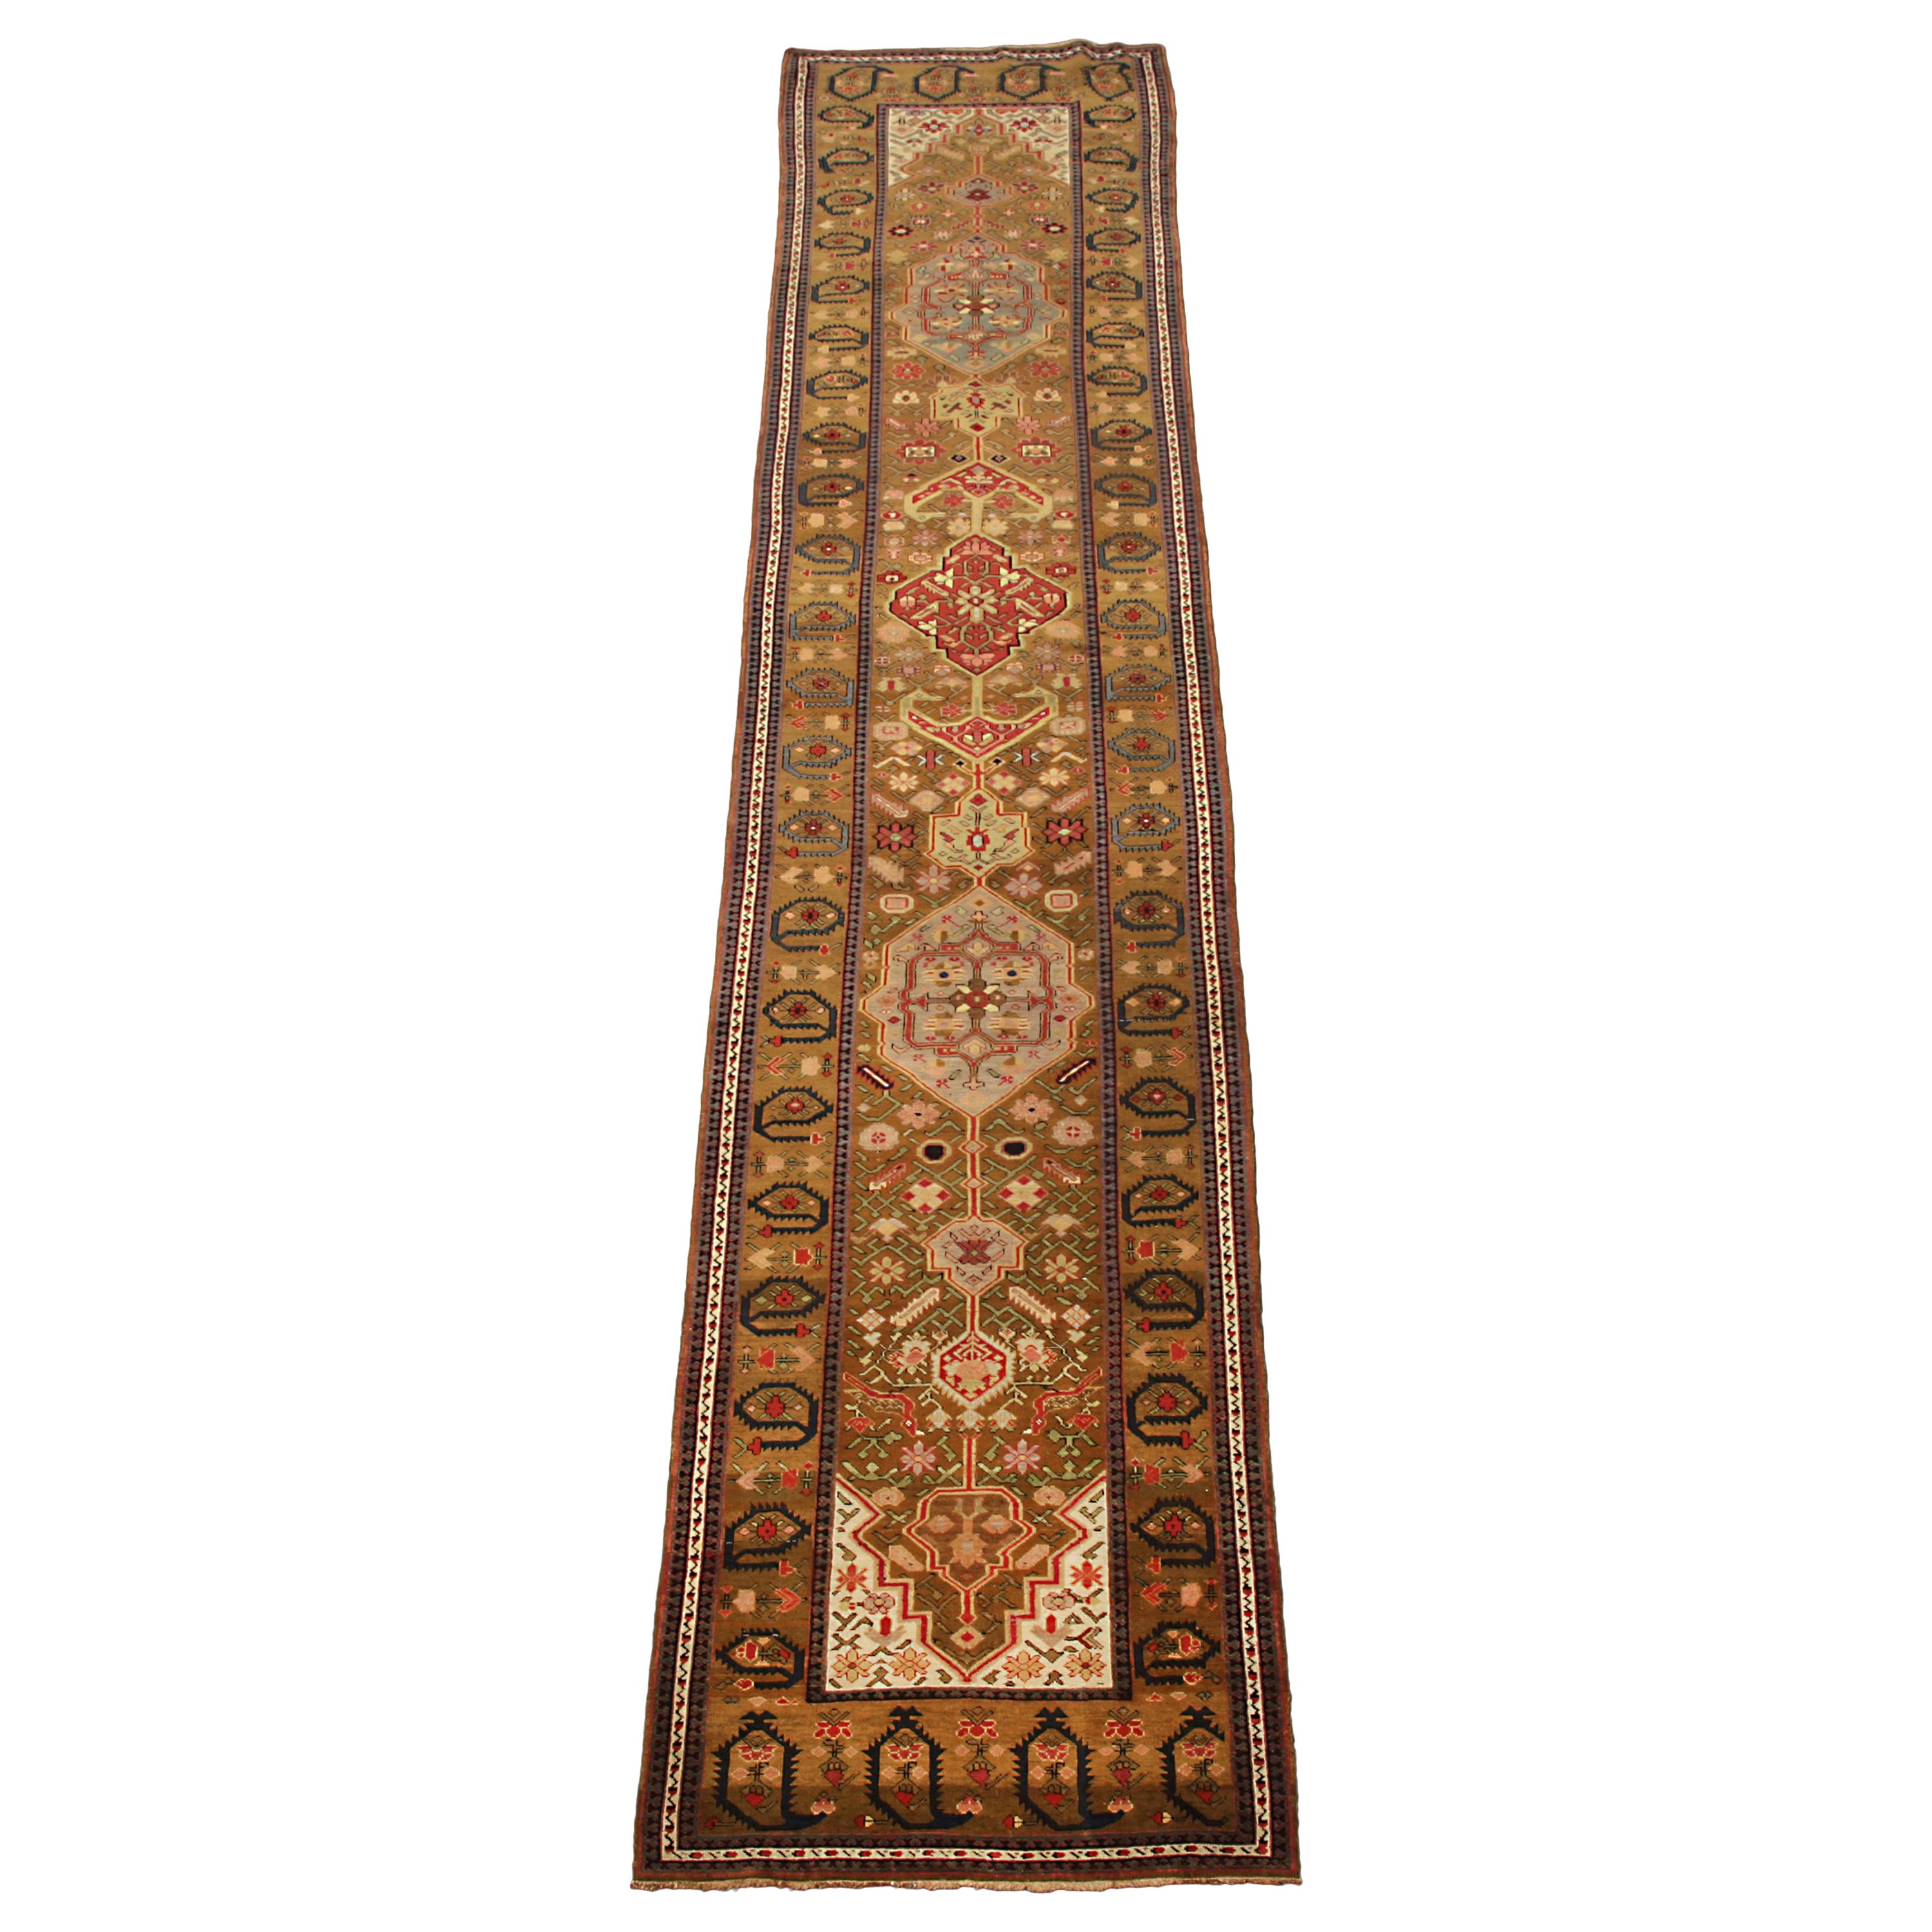 Circa 1880 Caucasian Wool Brown Karabakh 'Qarabag' Shusha Runner Carpet For Sale